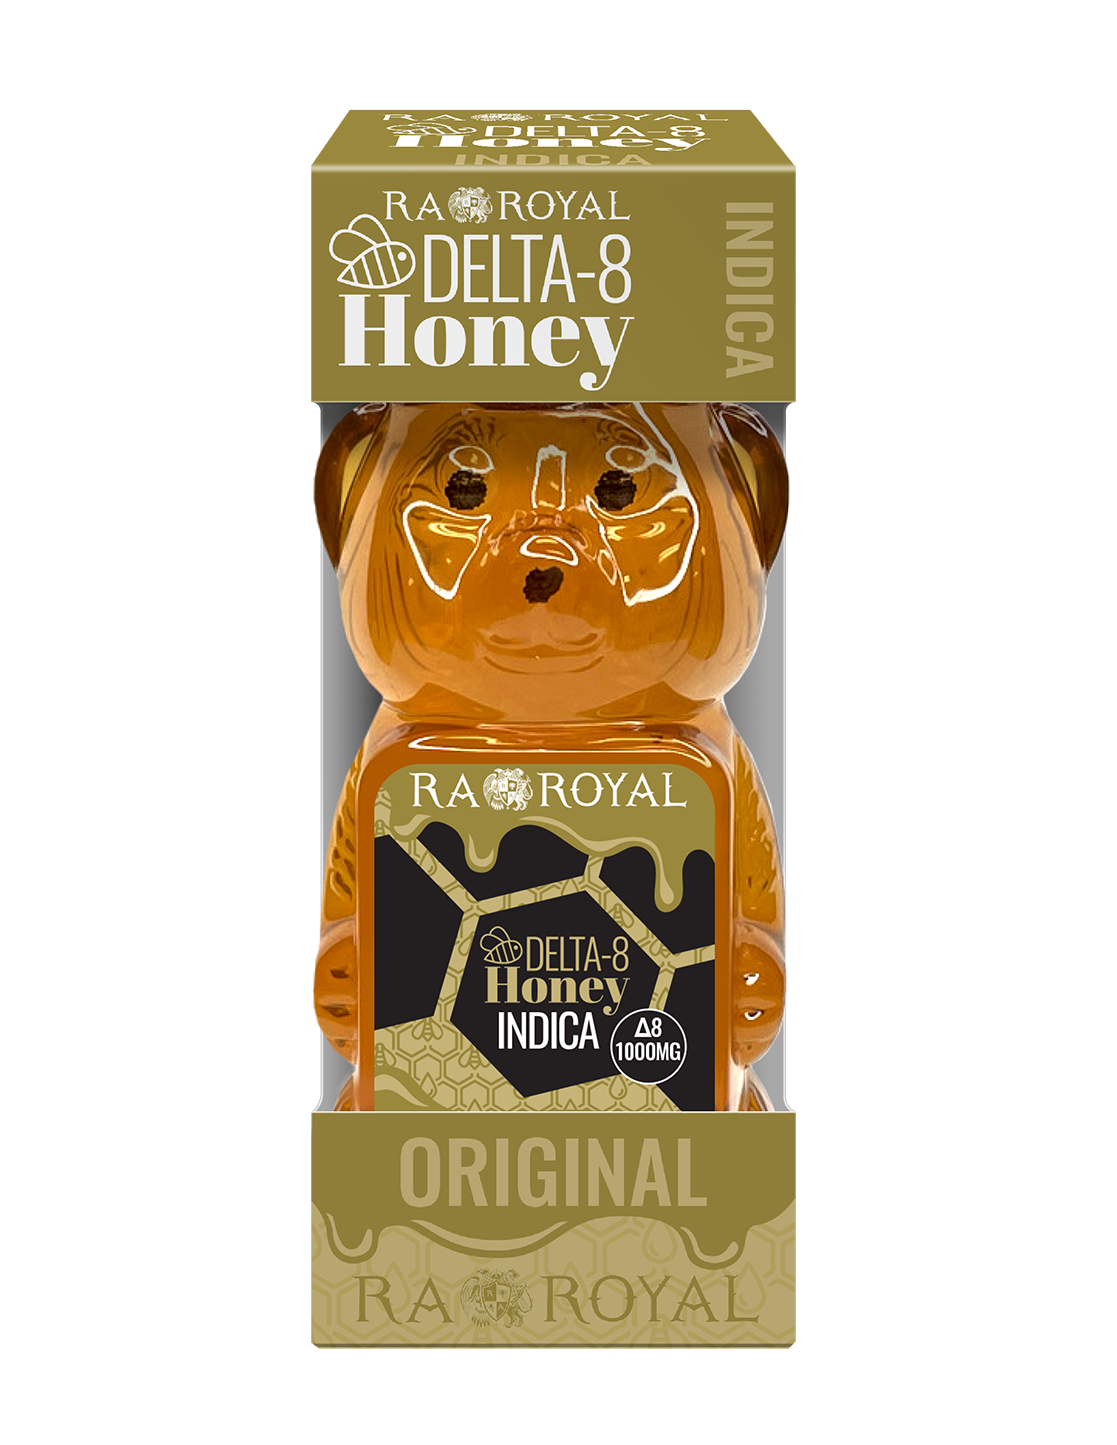 RA Royal Delta 8 Indica Honey Bear: Original Honey Dew